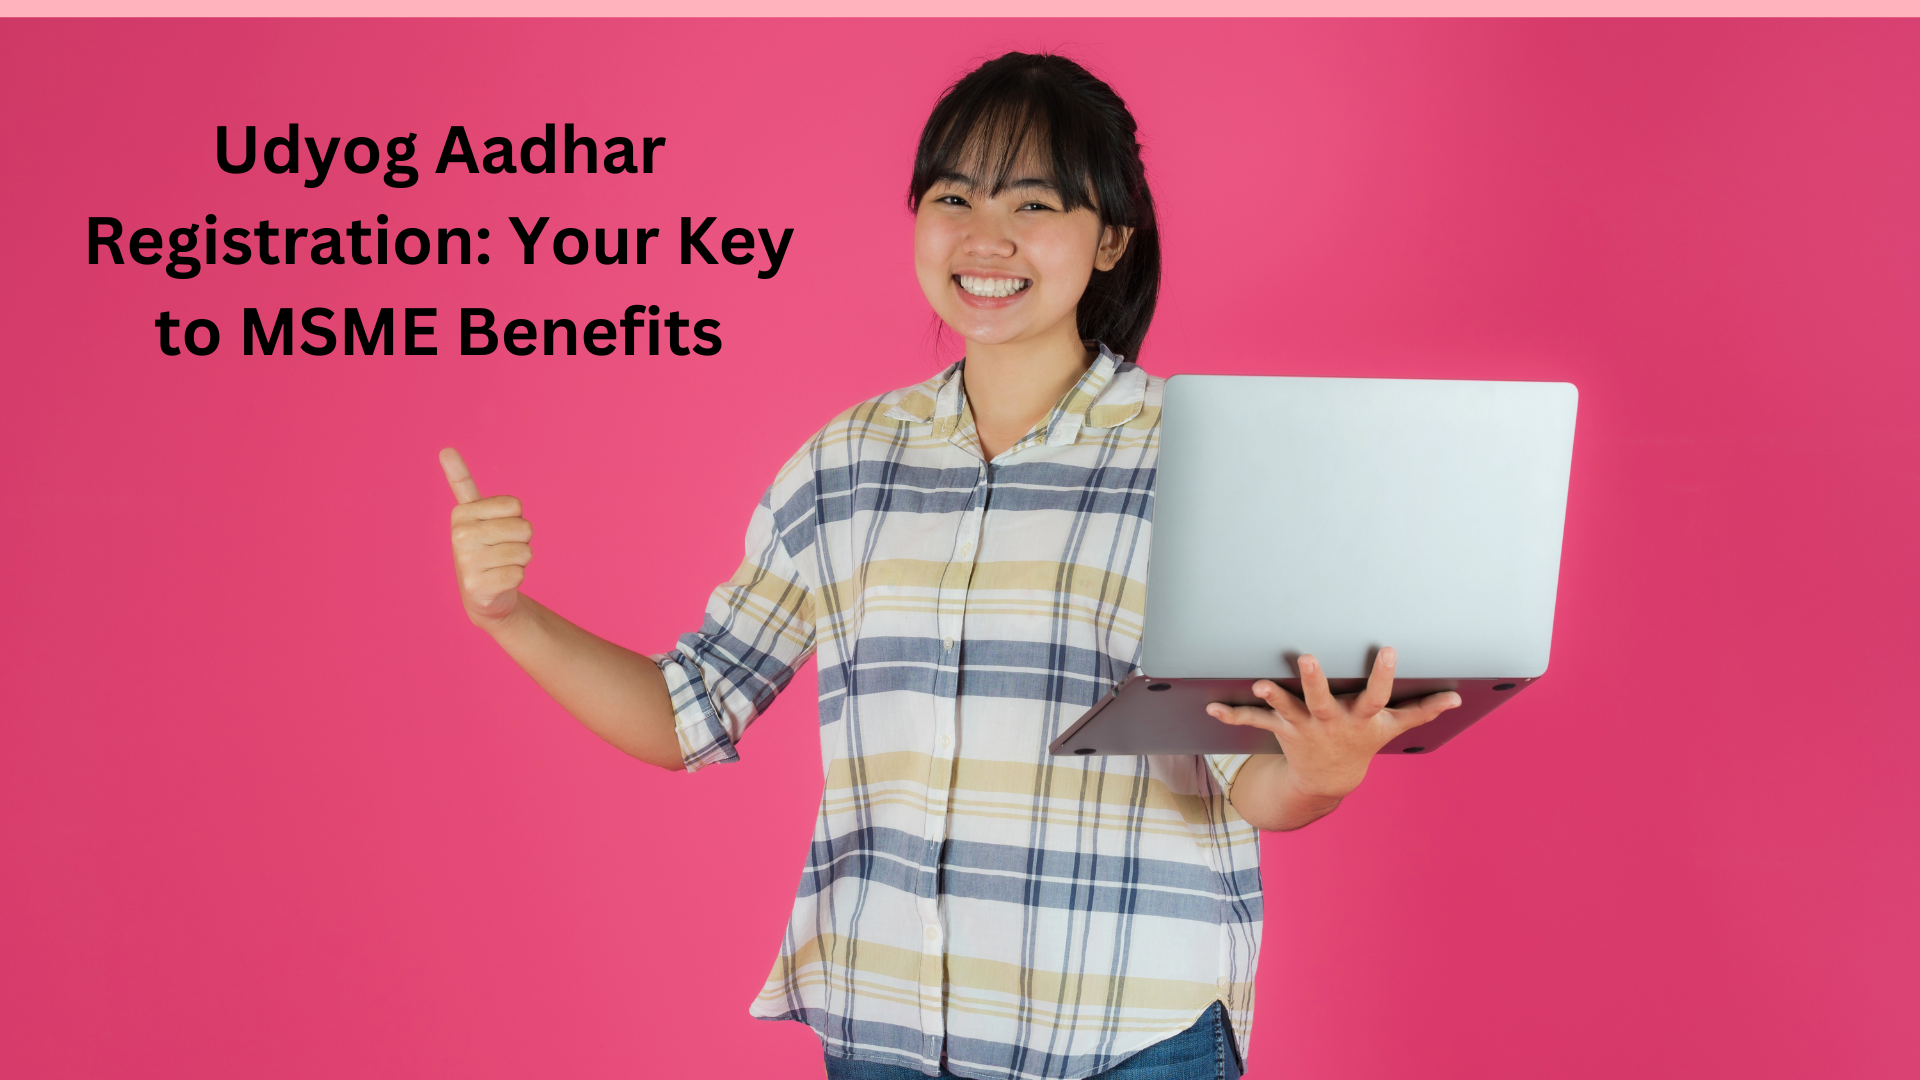 Udyog Aadhar Registration: Your Key to MSME Benefits